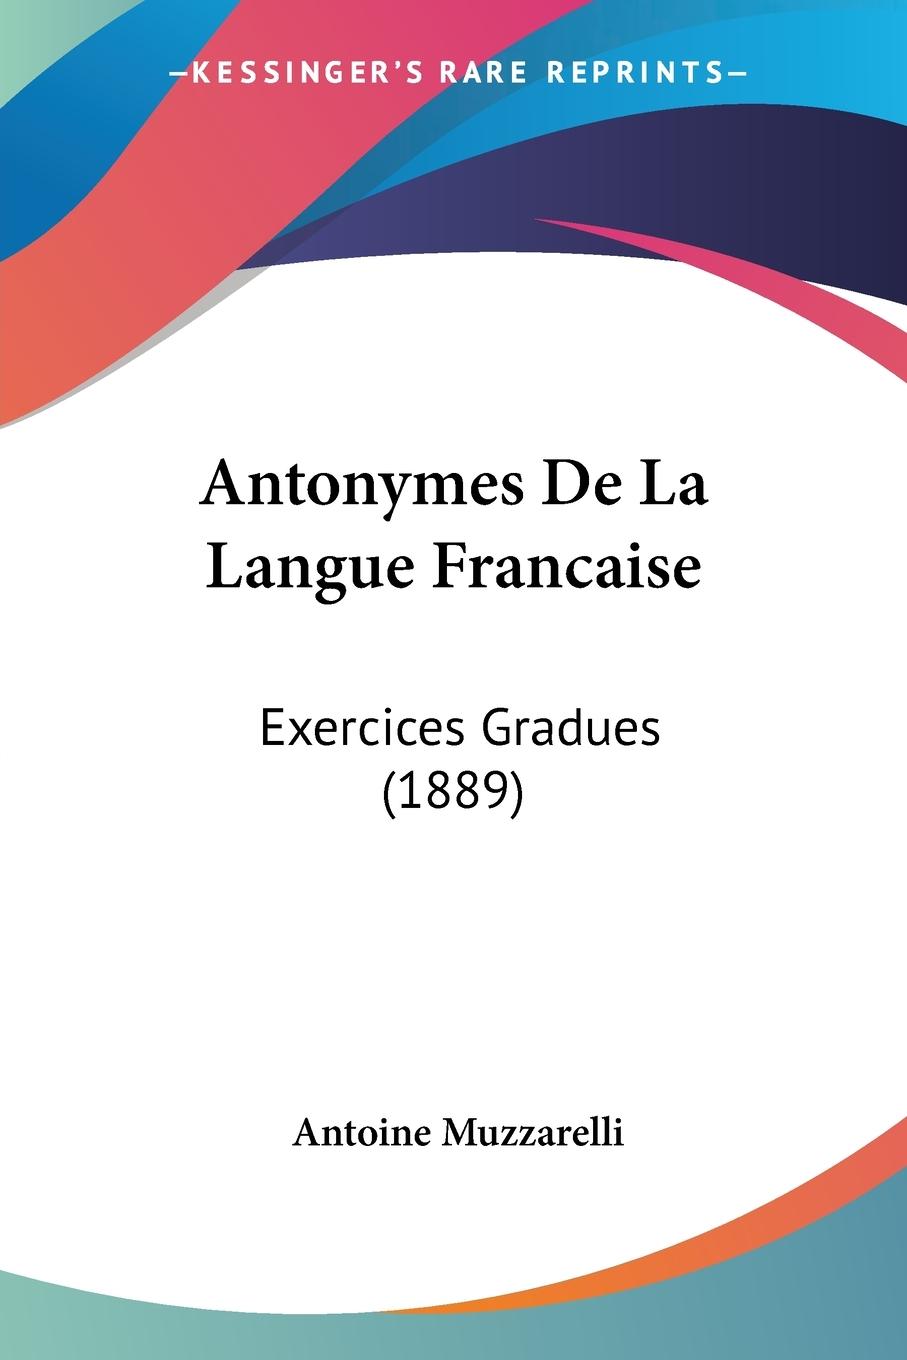 Antonymes De La Langue Francaise - Muzzarelli, Antoine